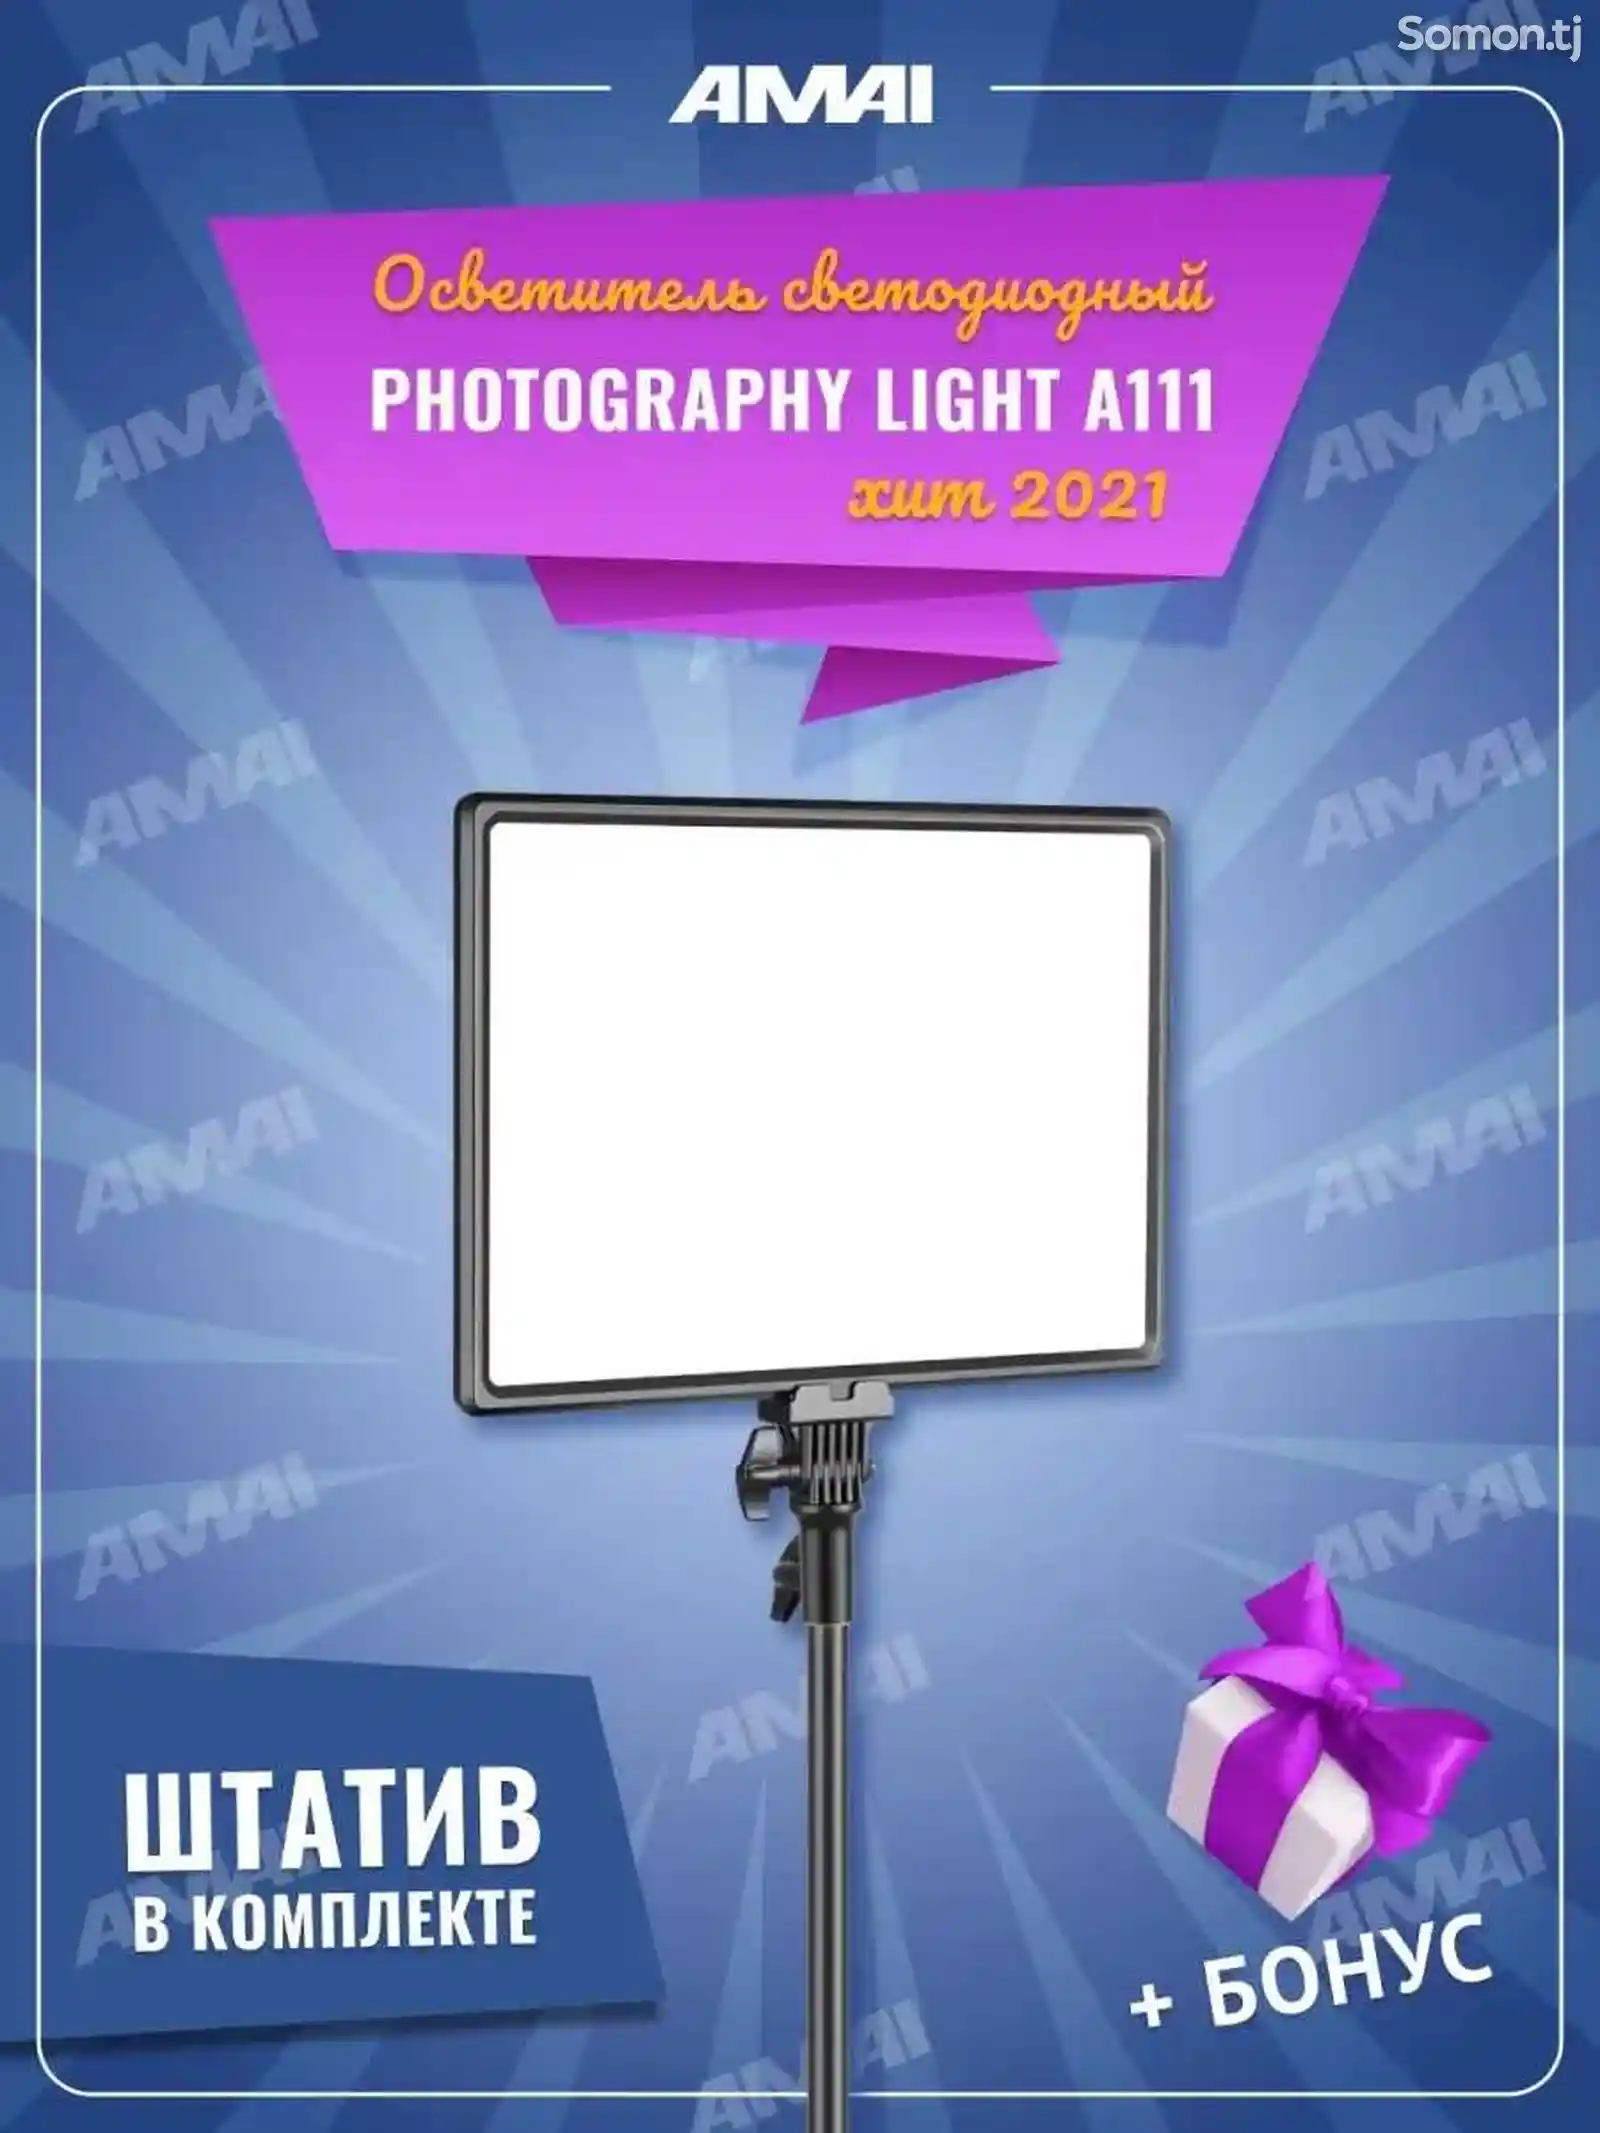 Профессиональная лампа Led Photography Light Pro A111 для фото и видео съёмки-4